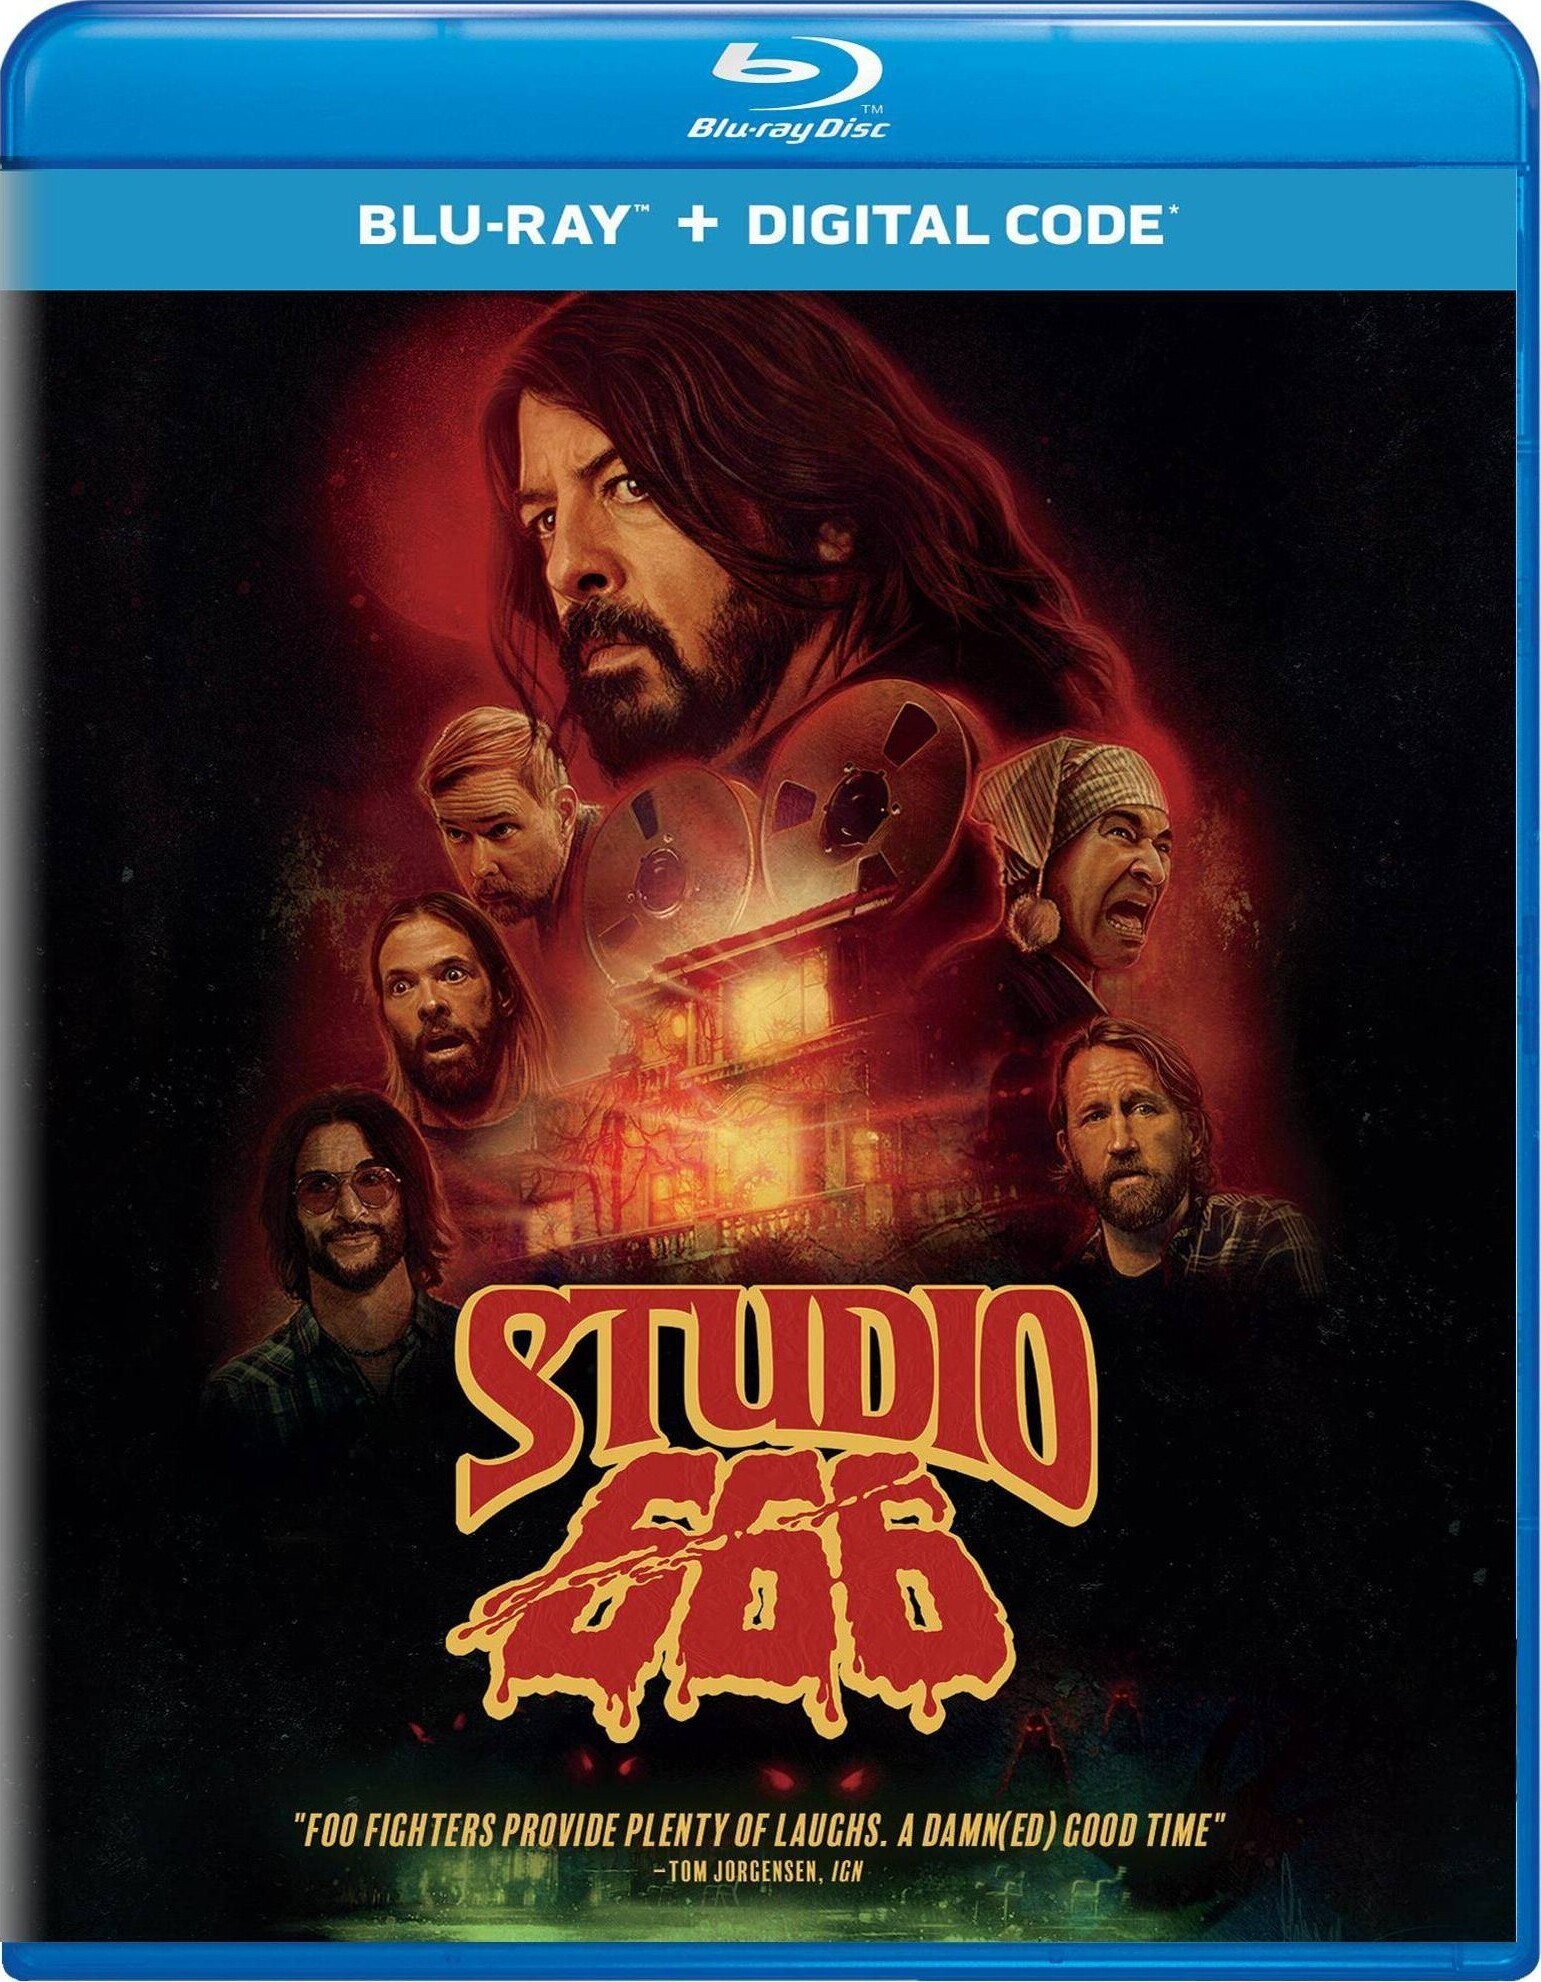 Studio 666 Blu-ray